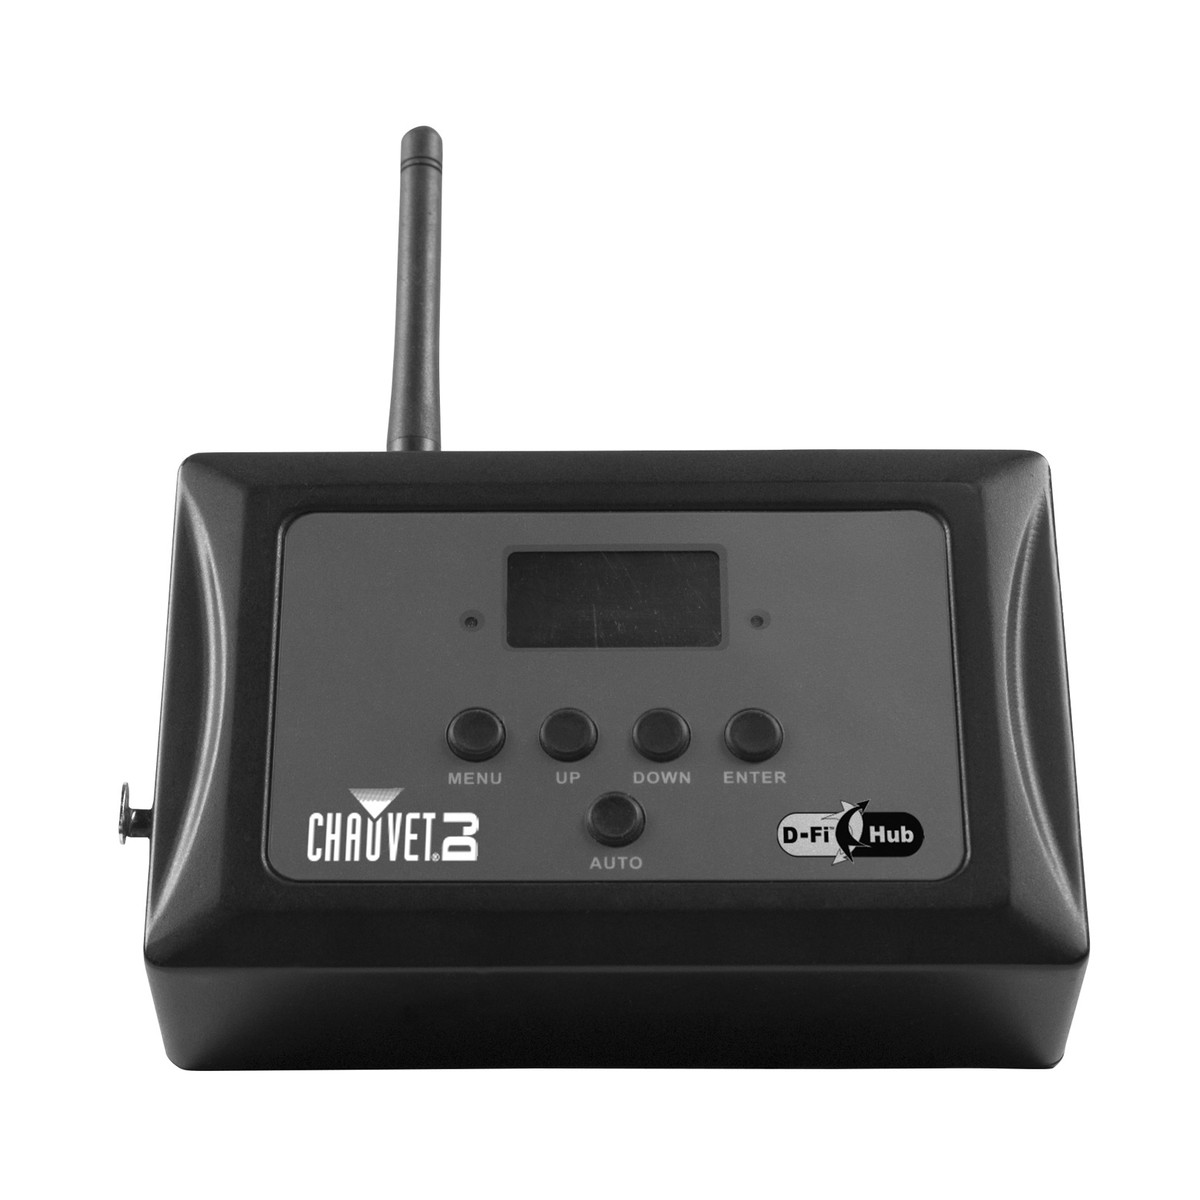 Chauvet D-Fi Hub Wireless DMX Transmitter